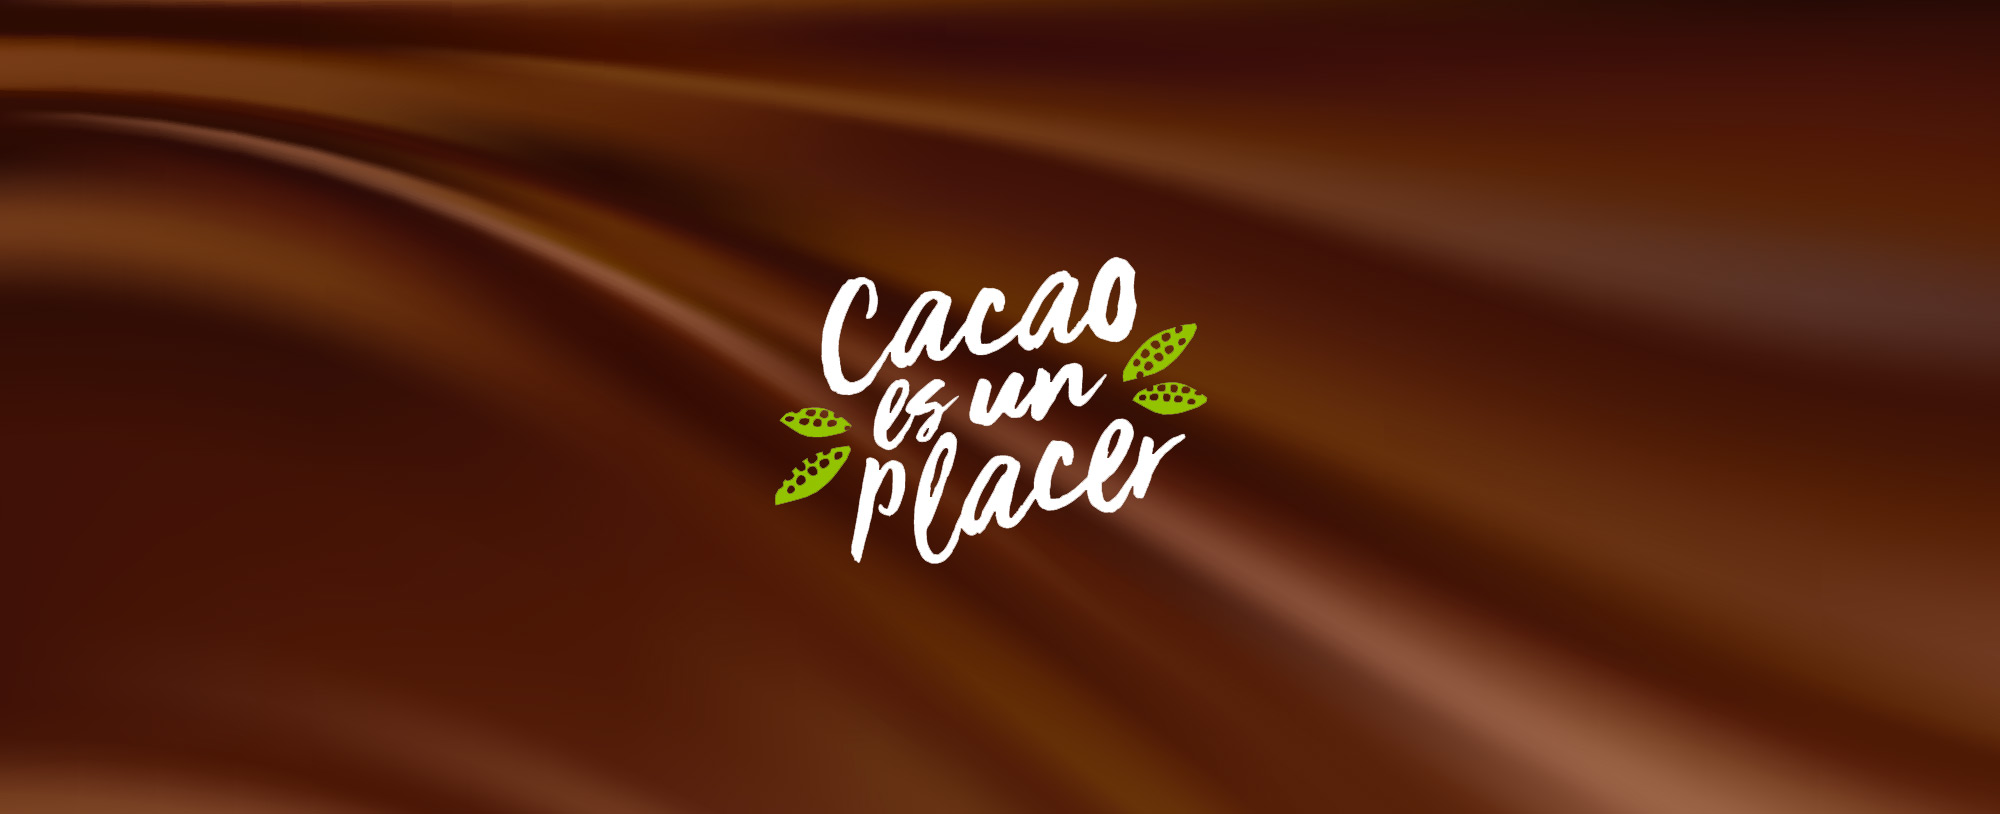 cocao logo